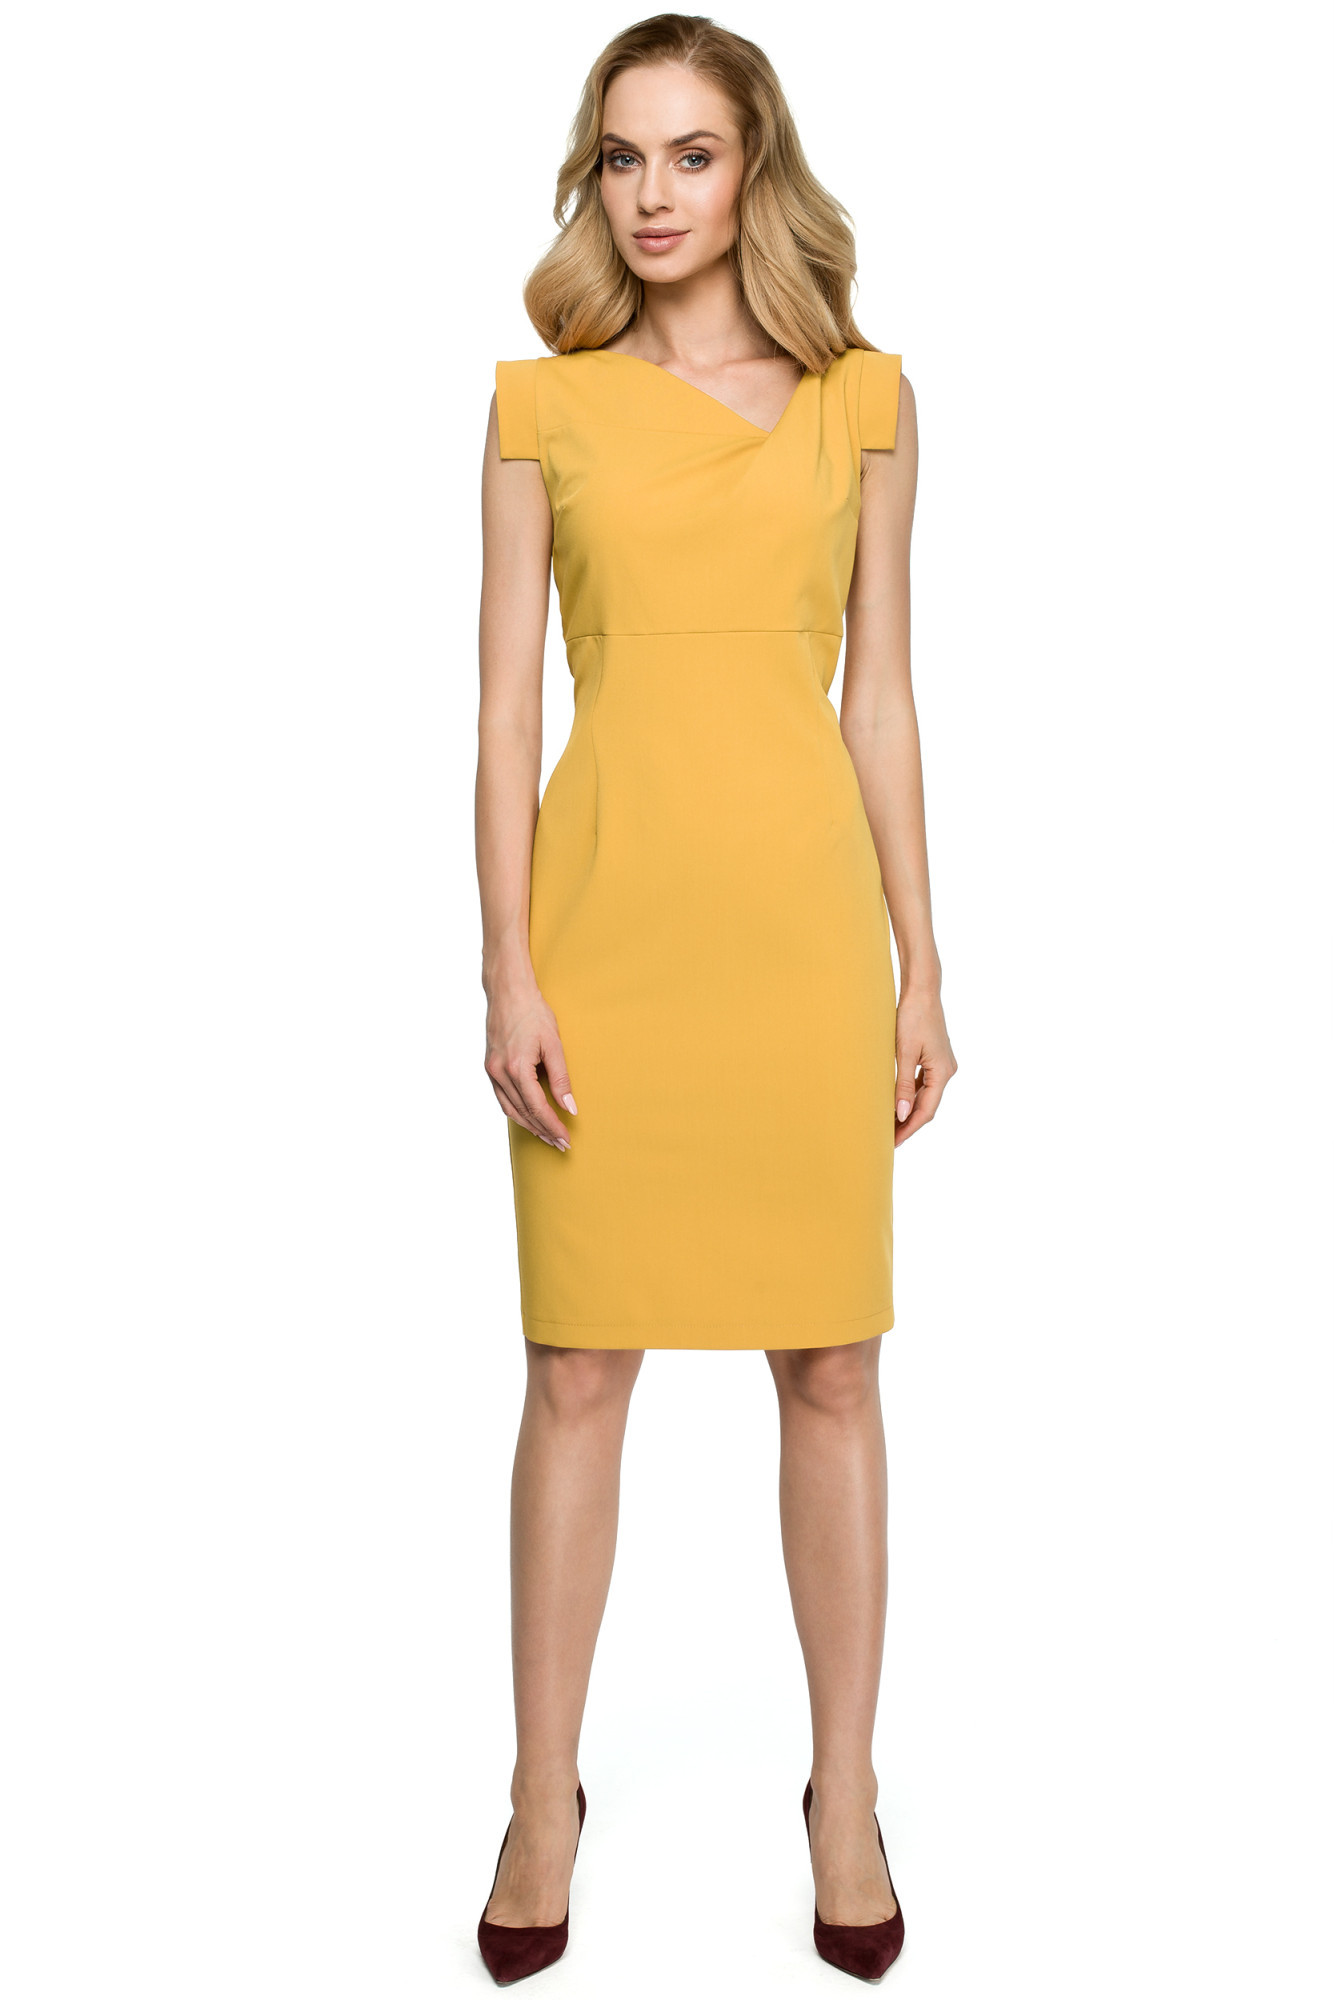 Stylove Dress S121 Yellow L